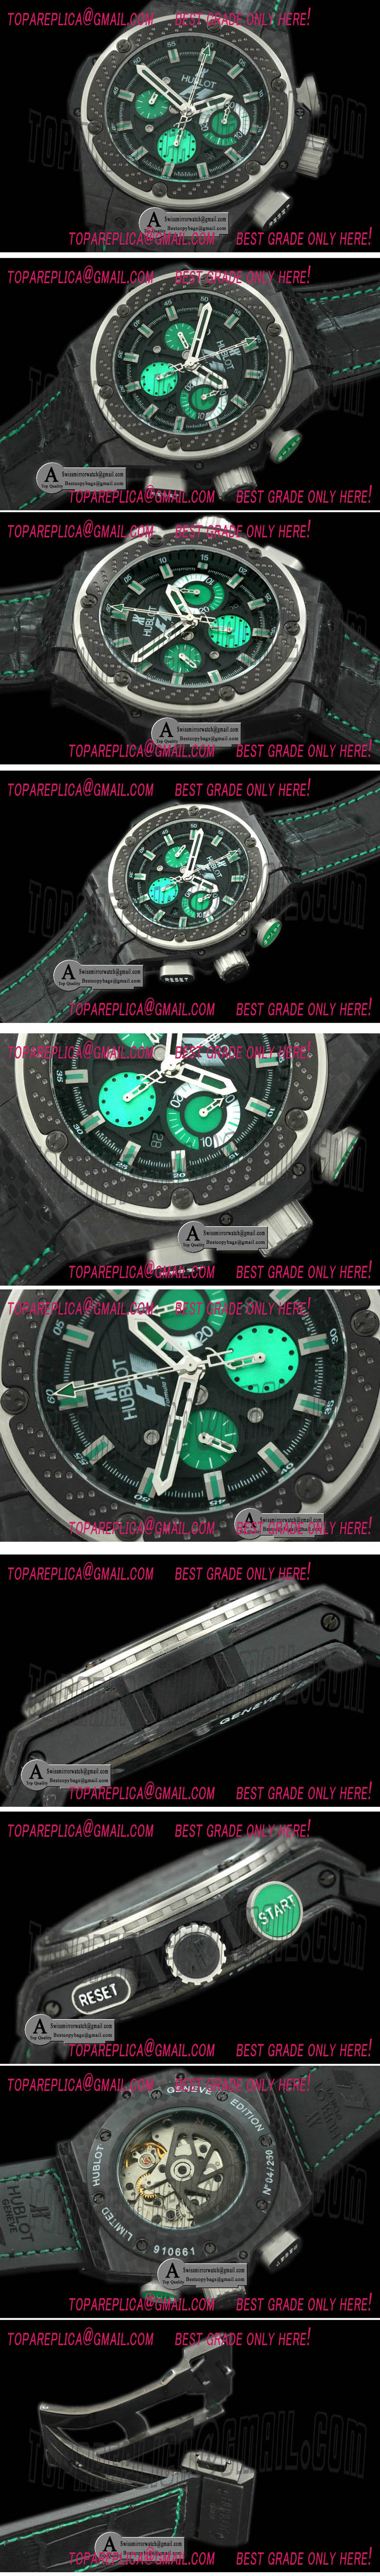 Hublot King Power F1 Interlago SS/Leather Black/Grn A-7750 28800bph Replica Watches